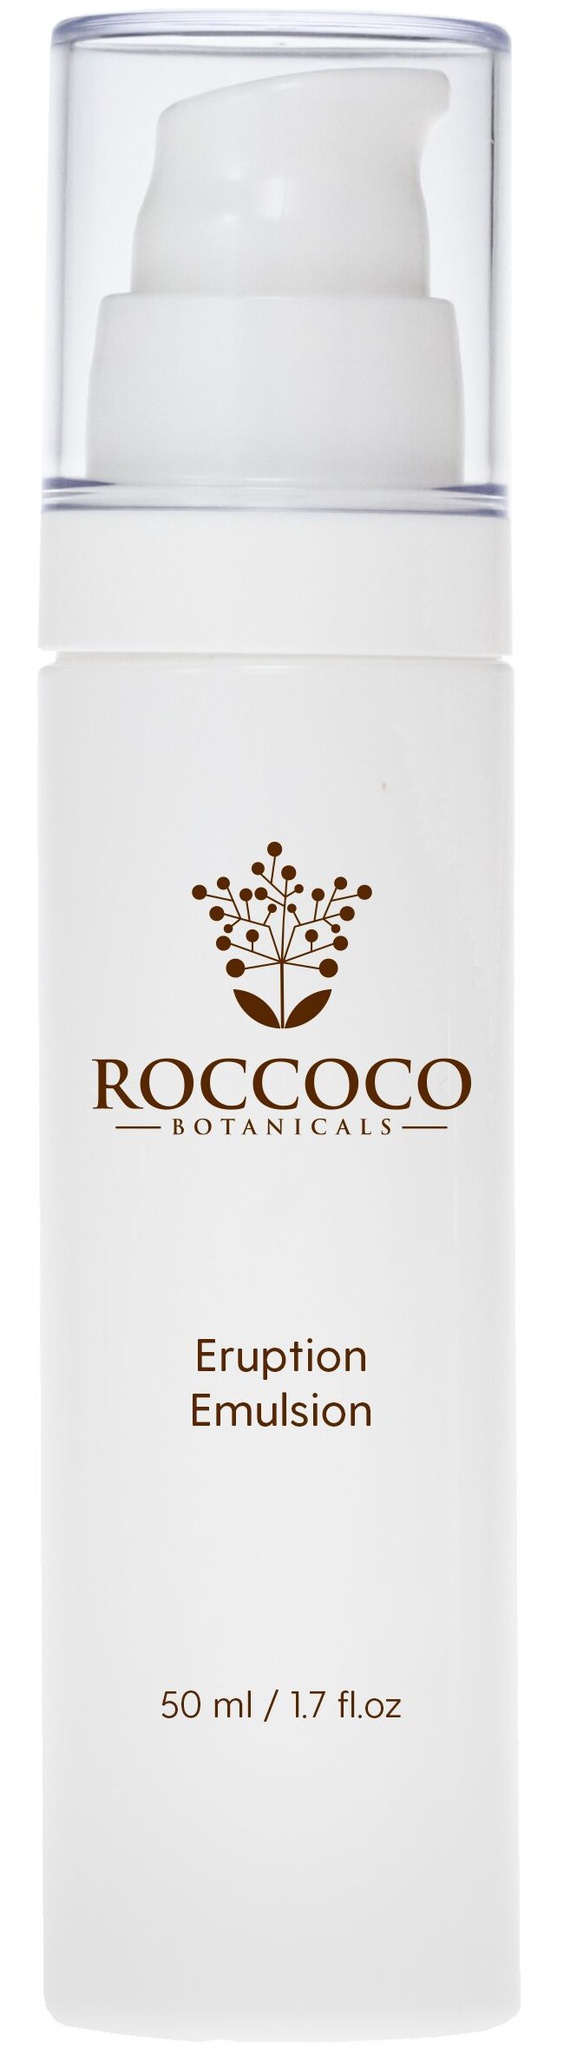 Roccoco Botanicals Eruption Emulsion